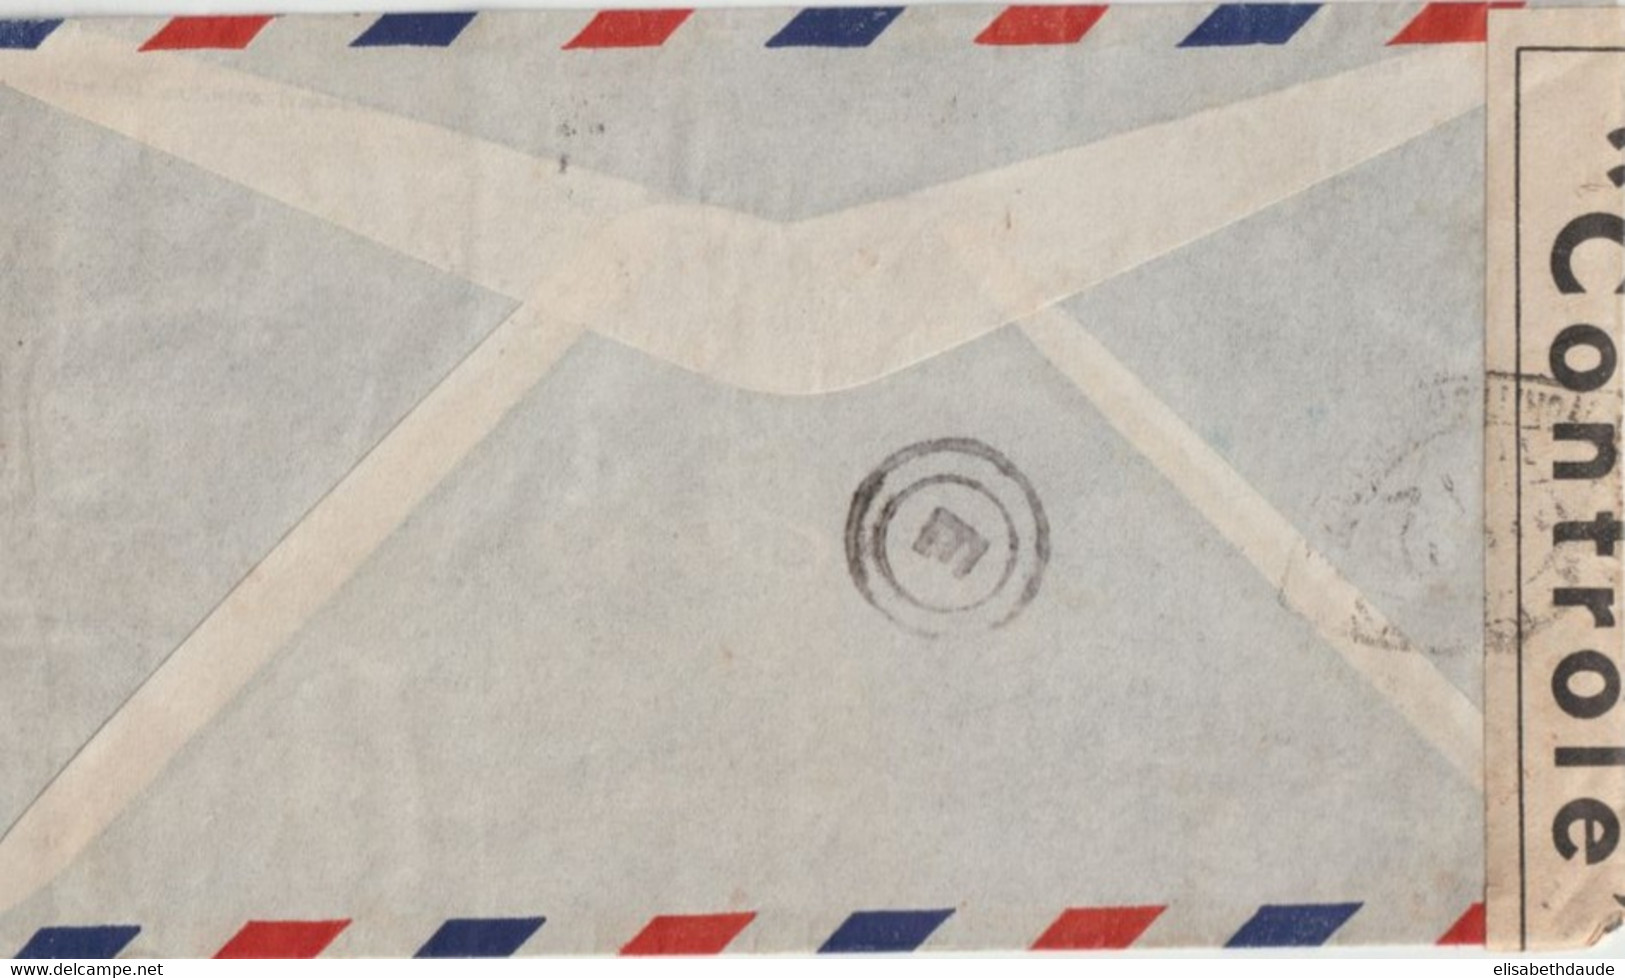 1941 - USA - POSTE AERIENNE - ENVELOPPE AIR MAIL Avec CENSURE FRANCAISE De SAINT JAMES => GENSAC (ZONE LIBRE FRANCE) - Cartas & Documentos